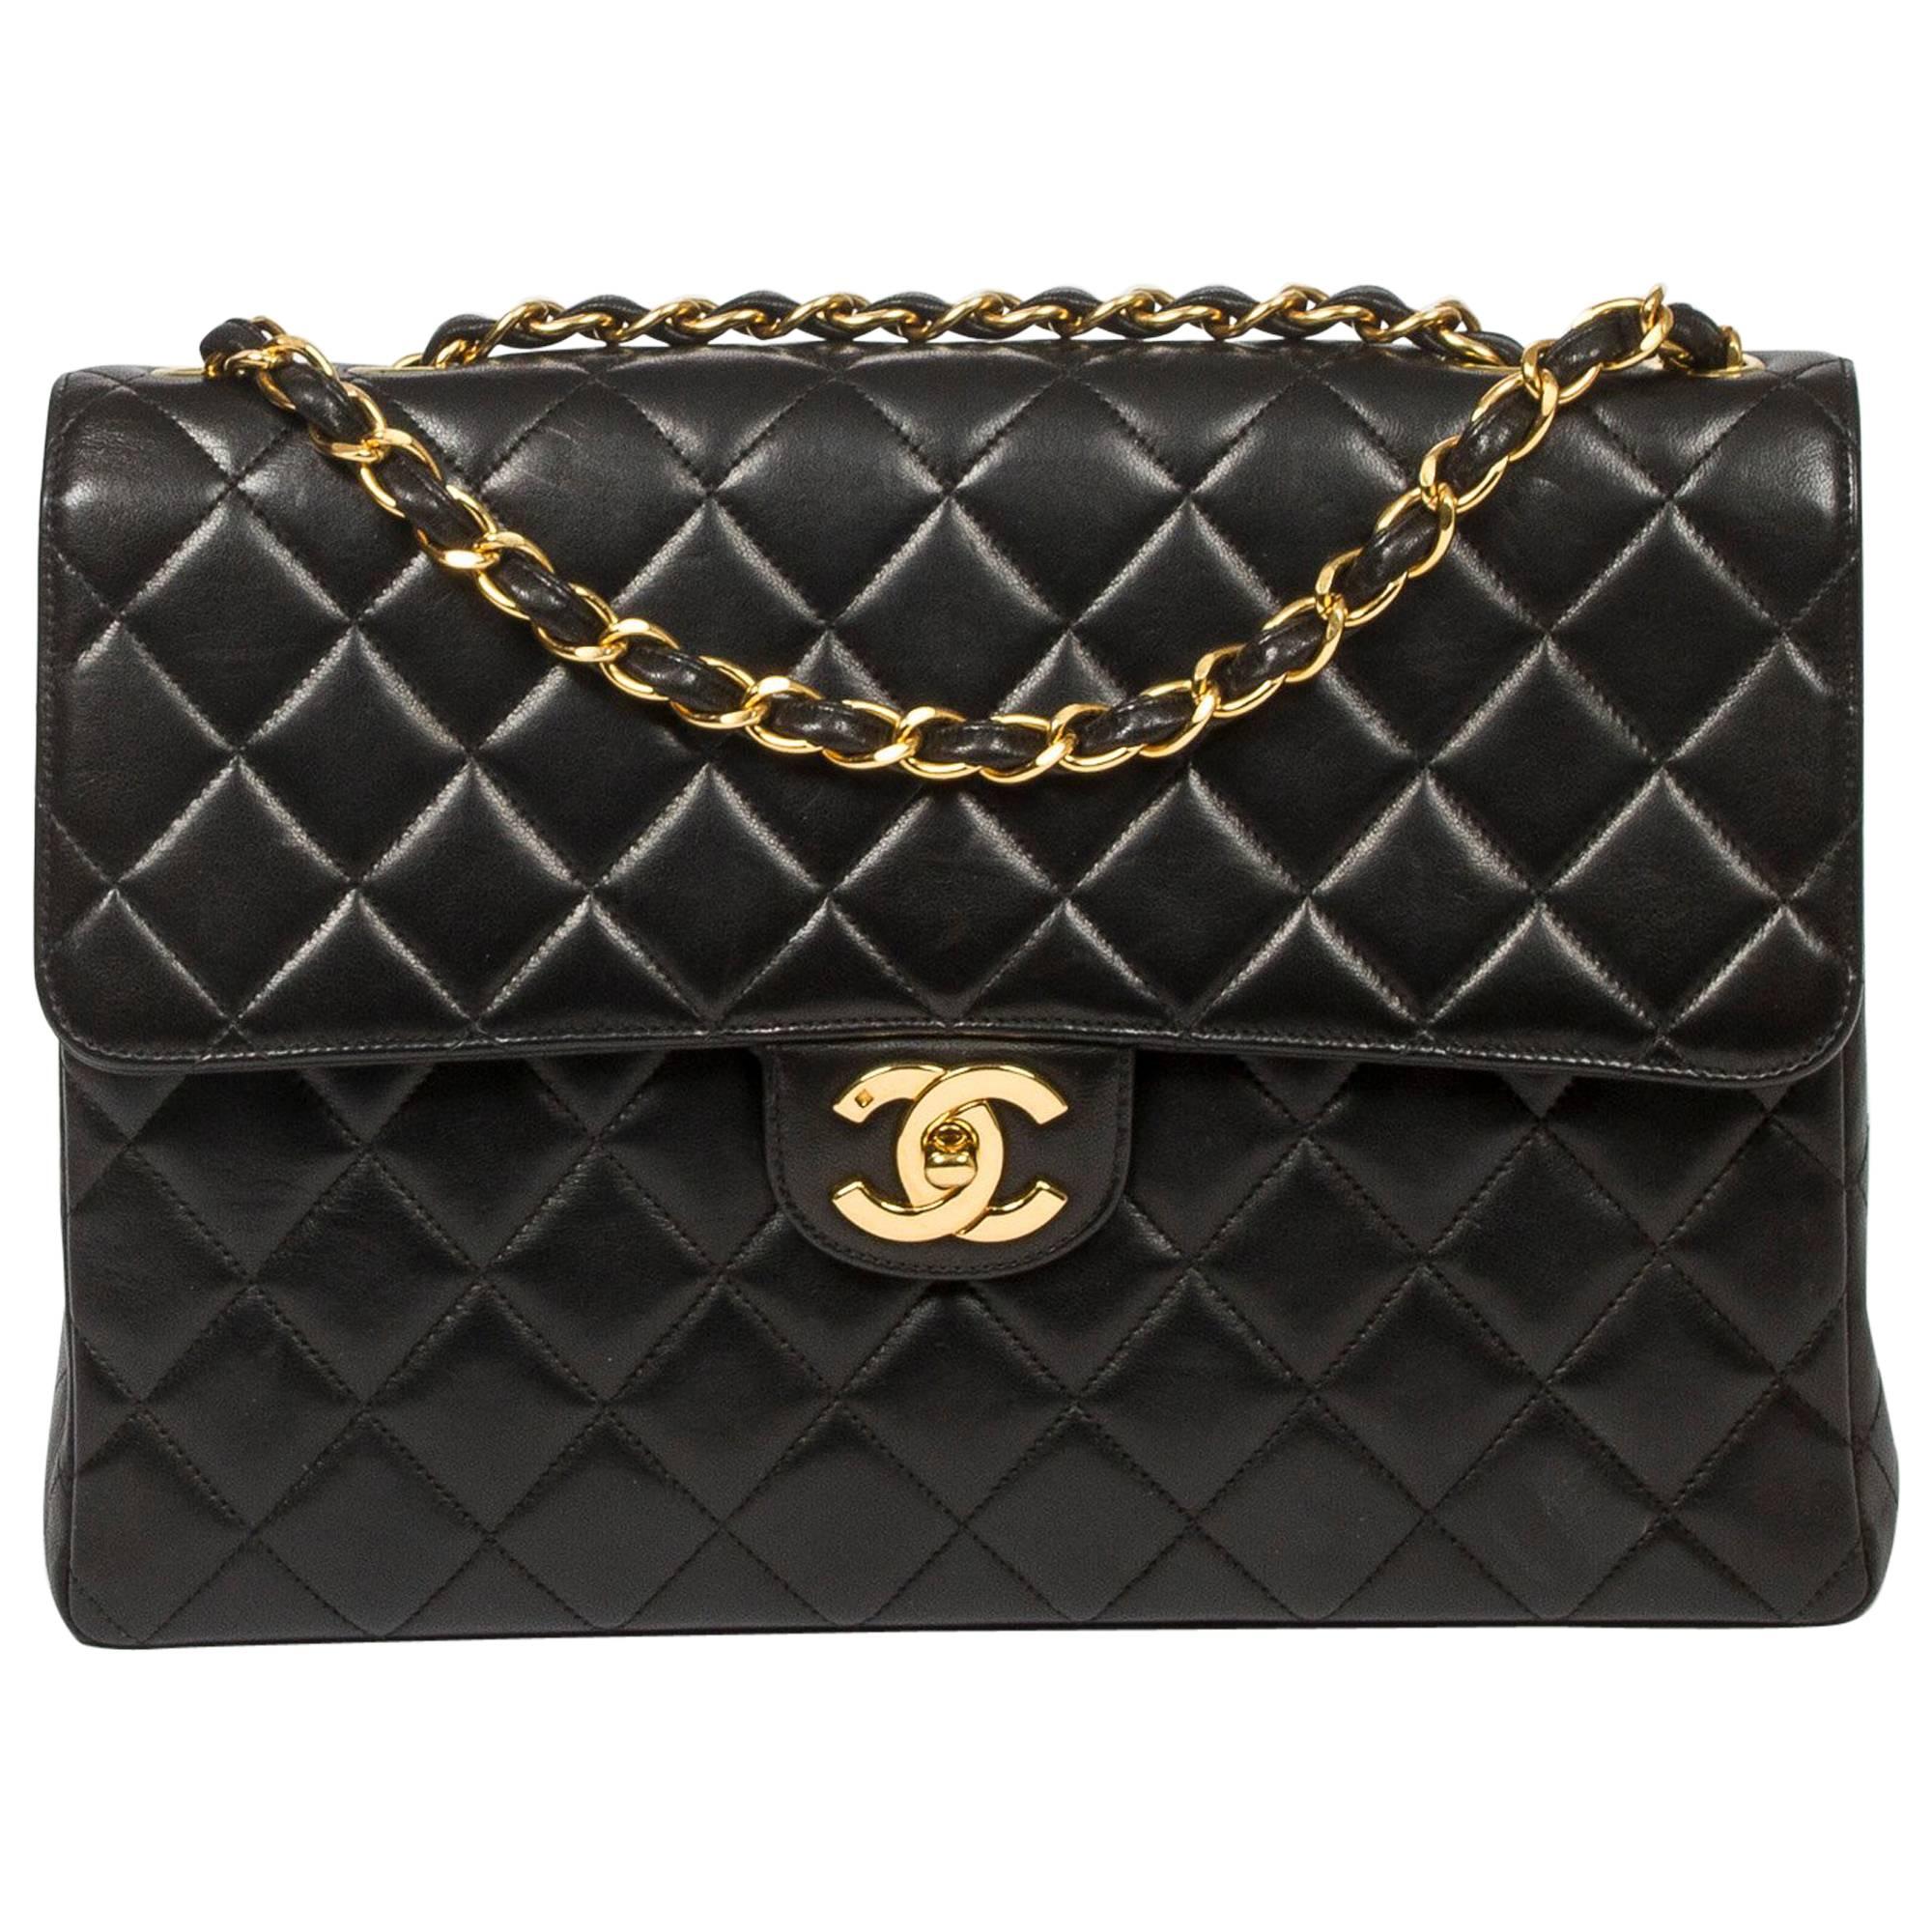 Chanel Jumbo Small Turnlock Black Leather Bag